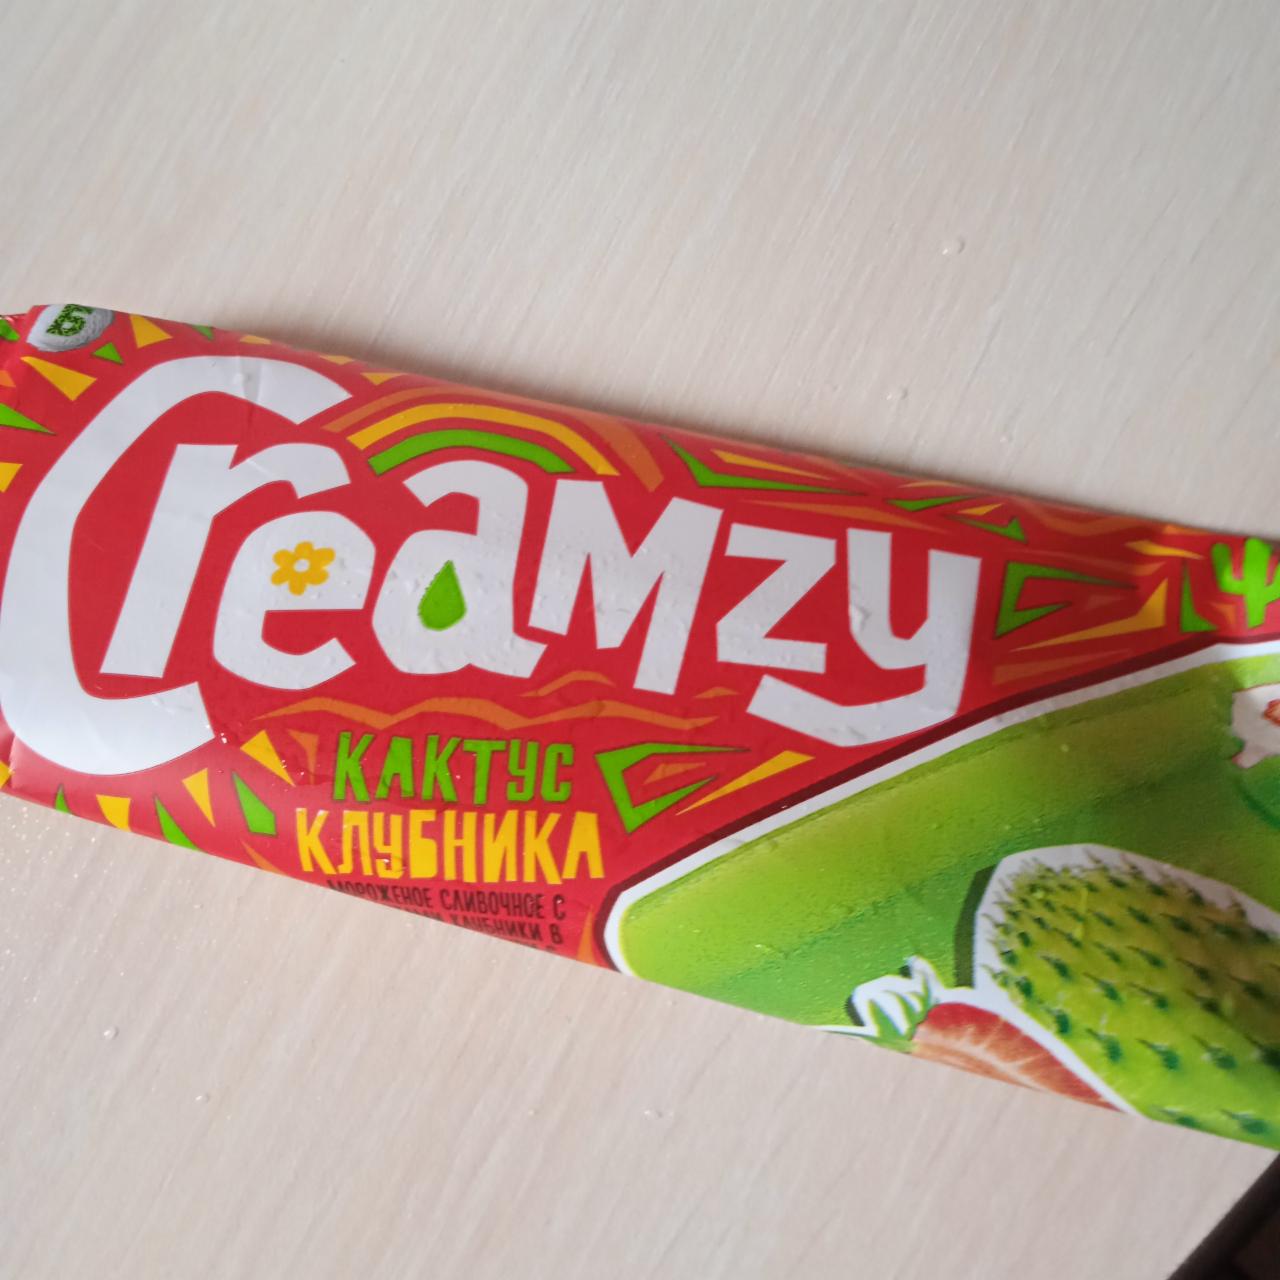 Фото - Мороженое кактус клубника Creamzy